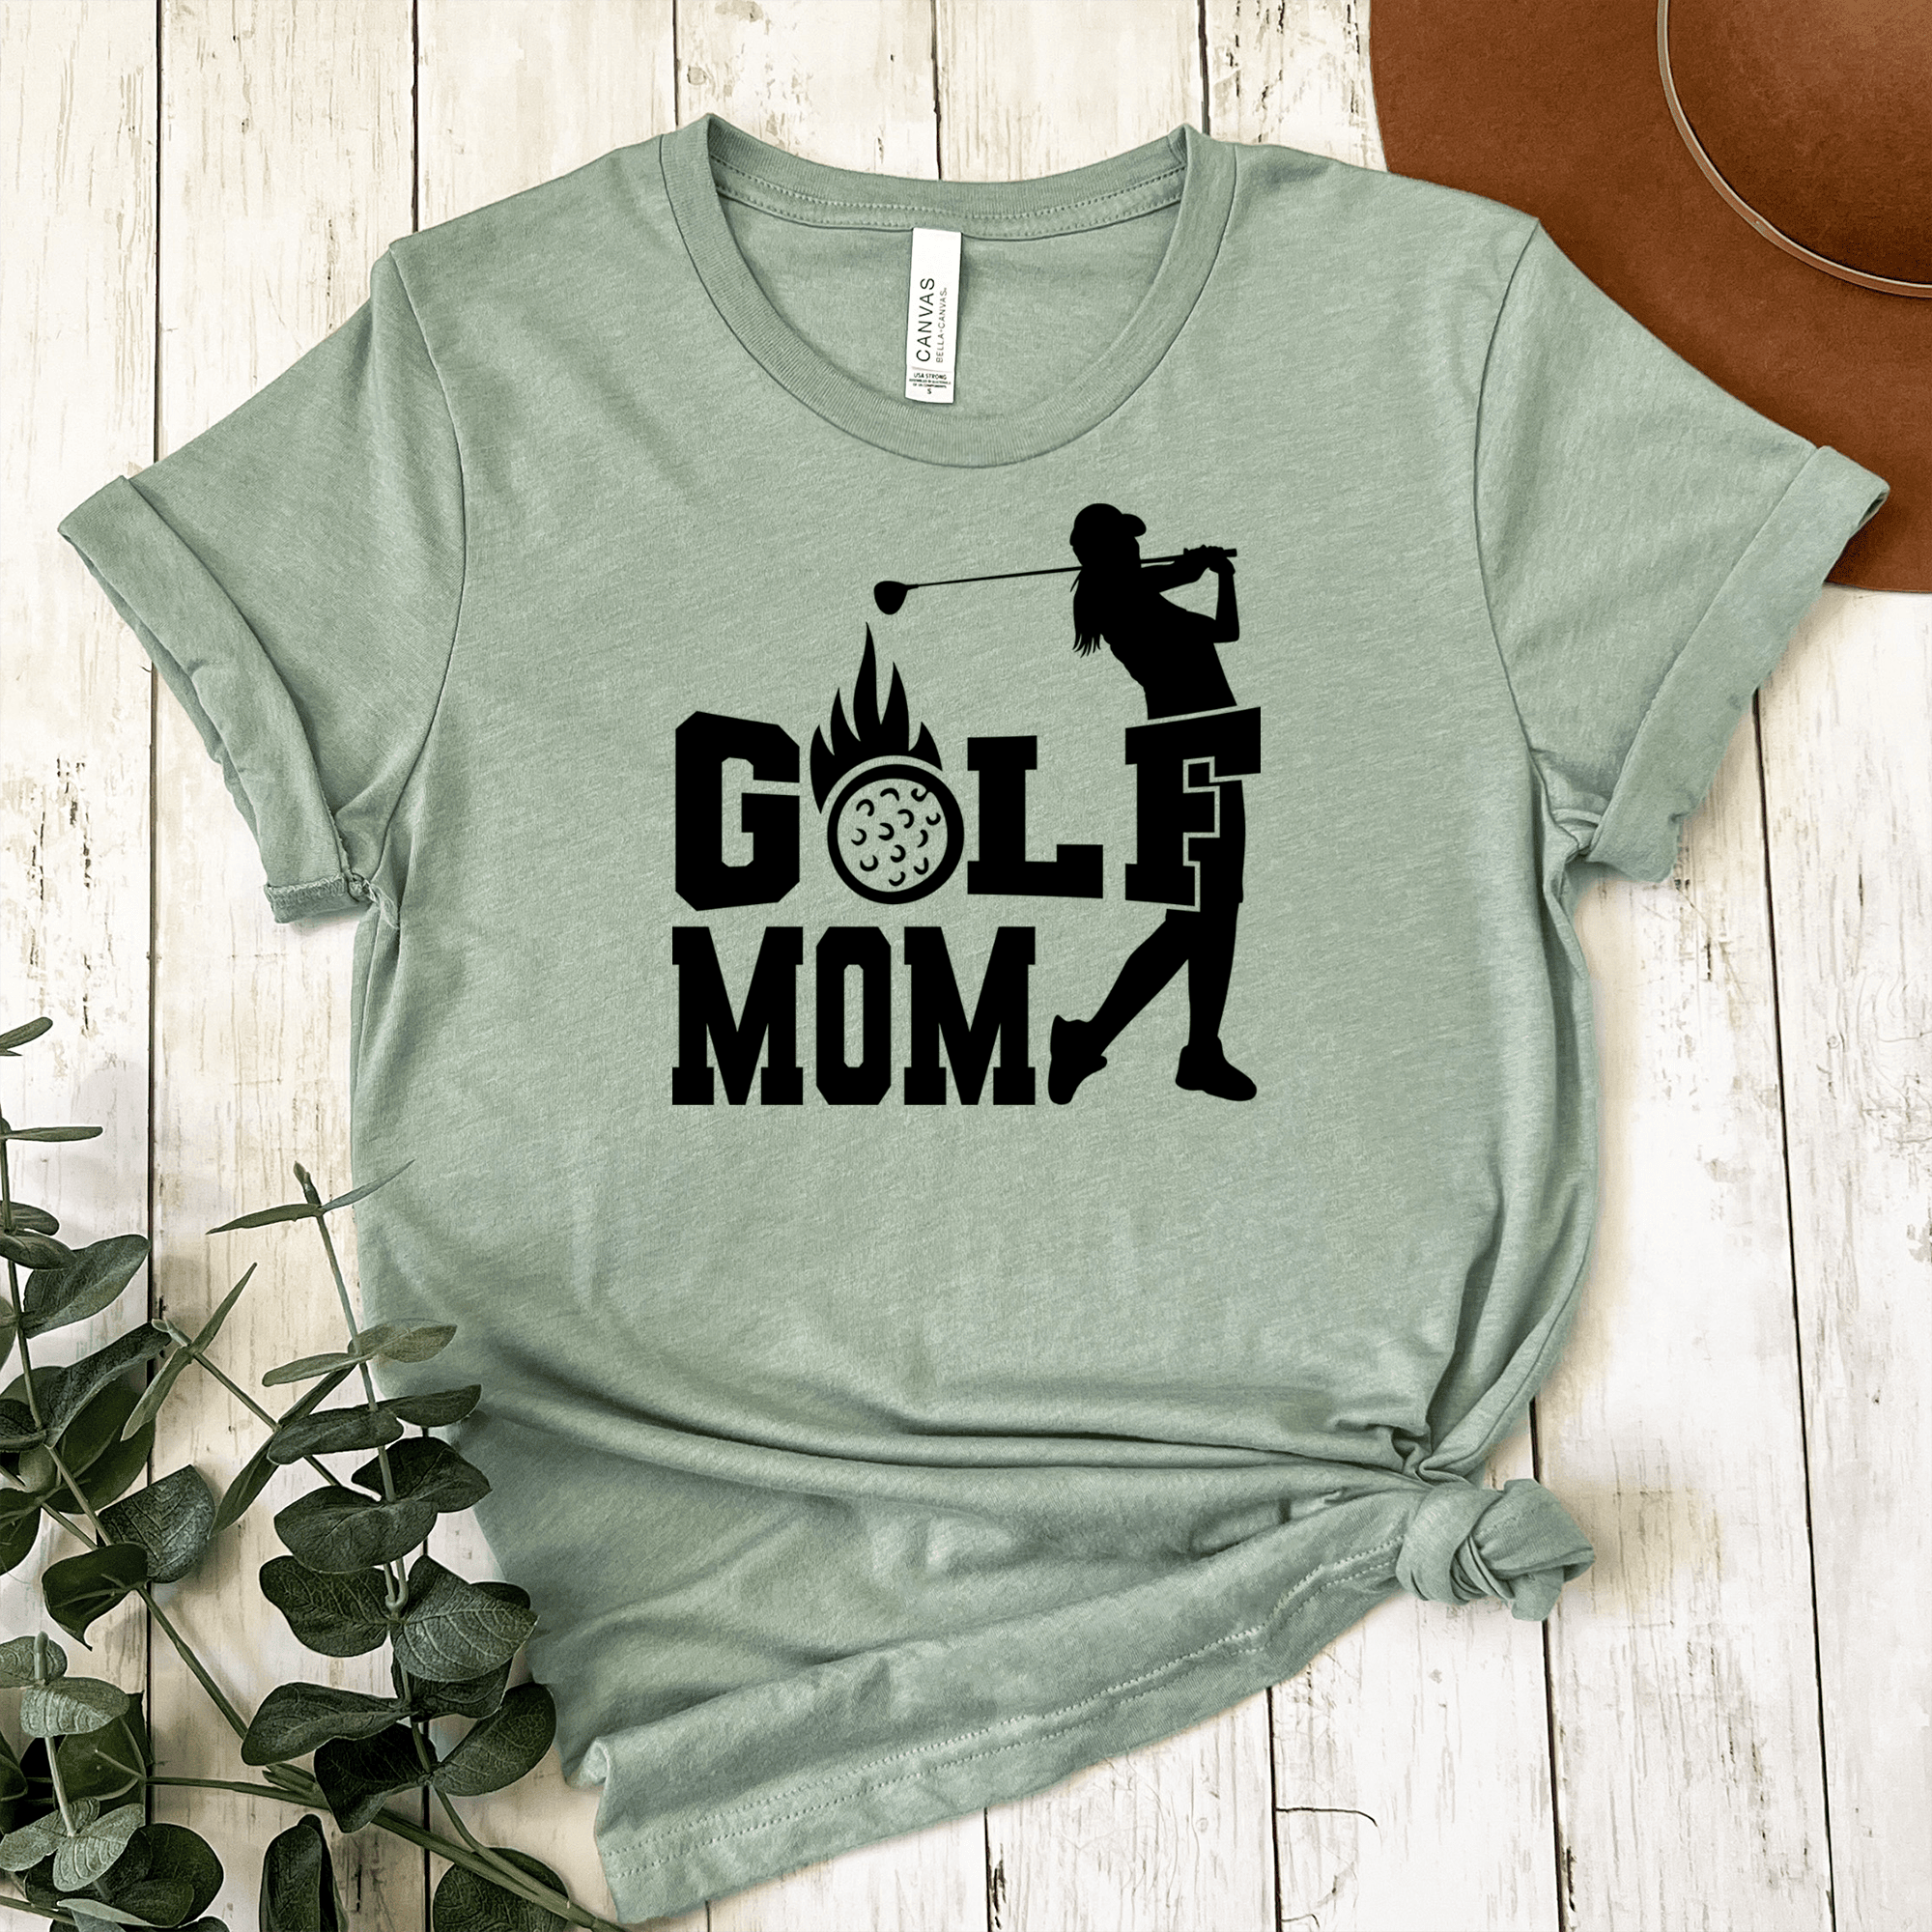 Womens Light Green T Shirt with On-Fire-Golf-Mom design